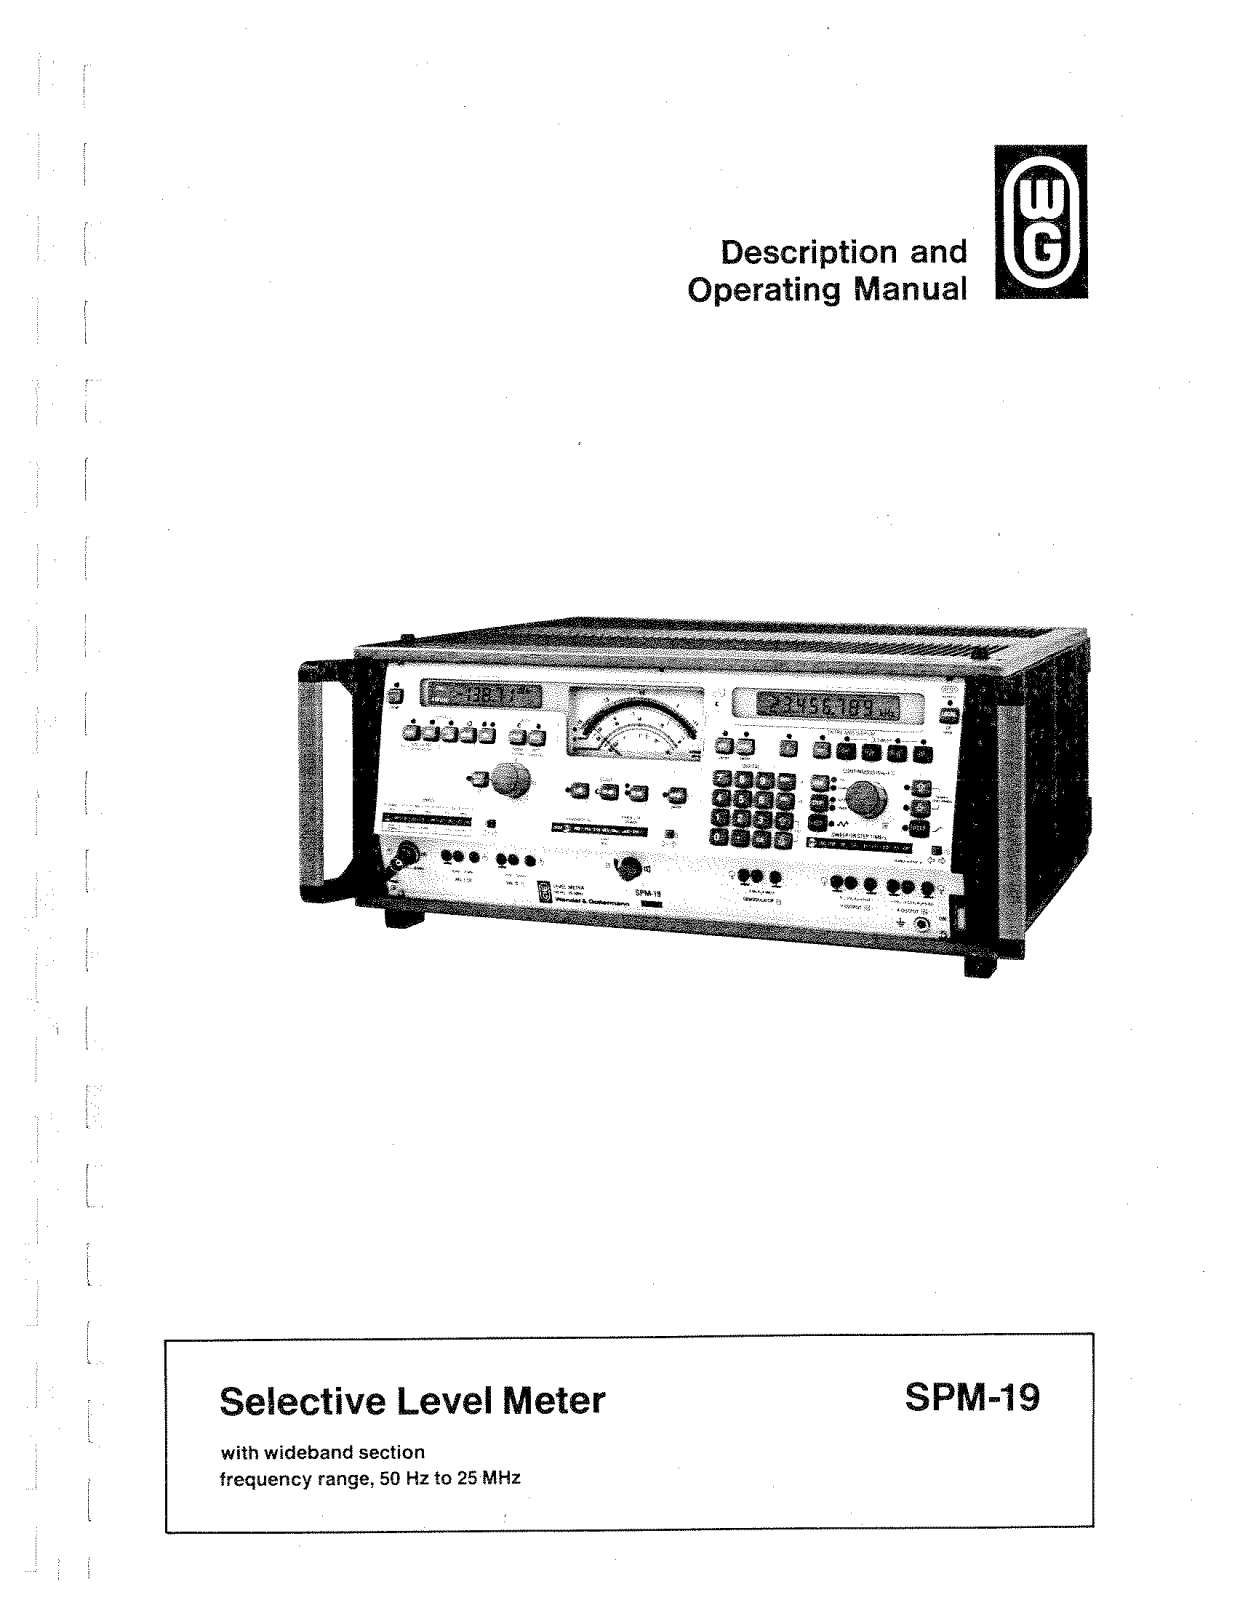 Wandel & Goltermann SPM-19 User Manual